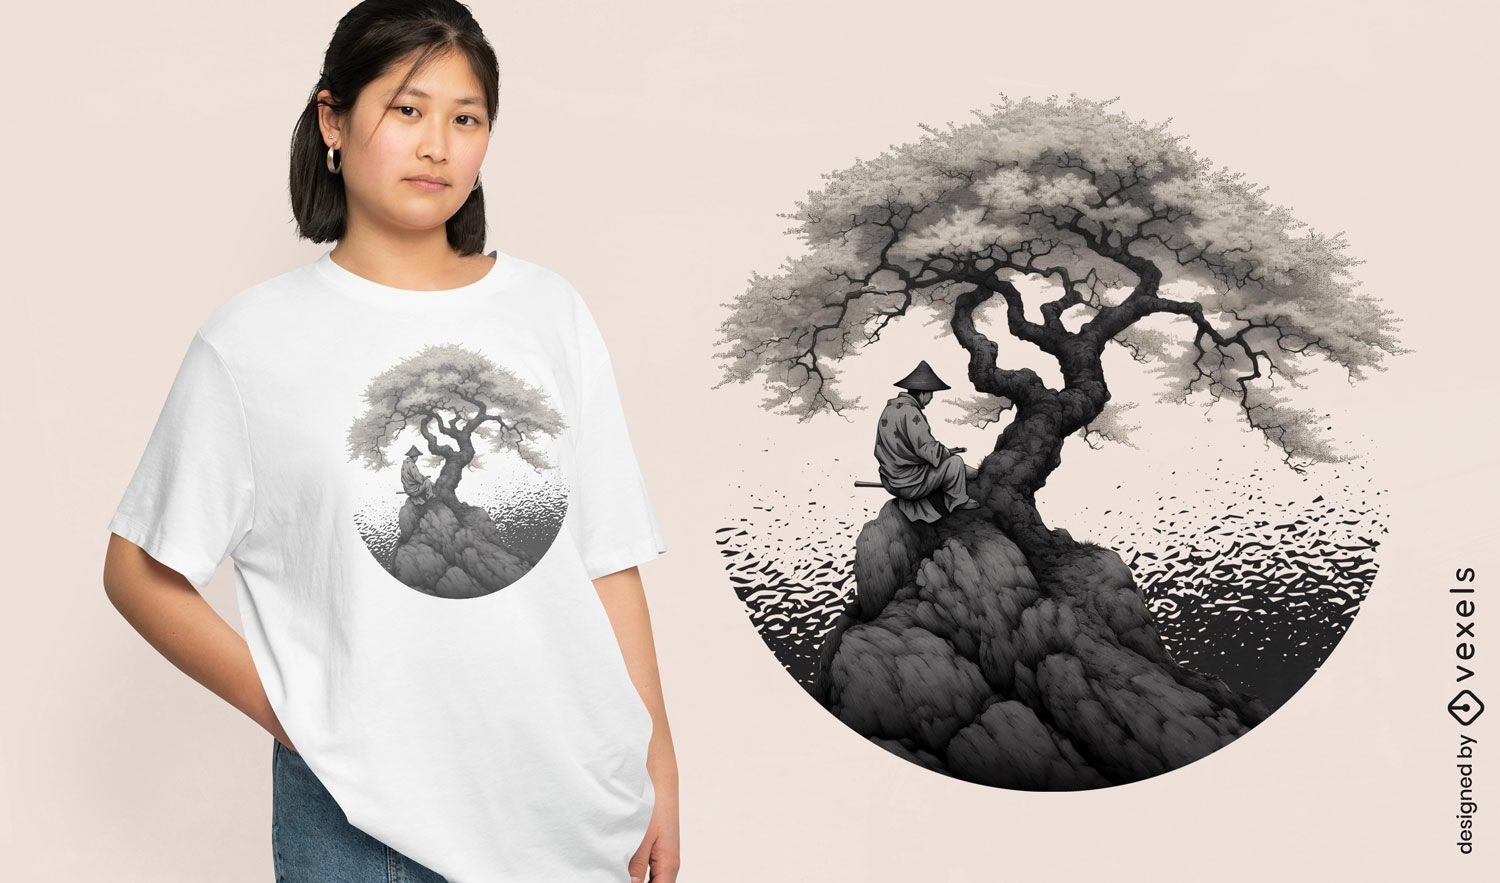 Árvore de sakura japonesa e design de camiseta samurai